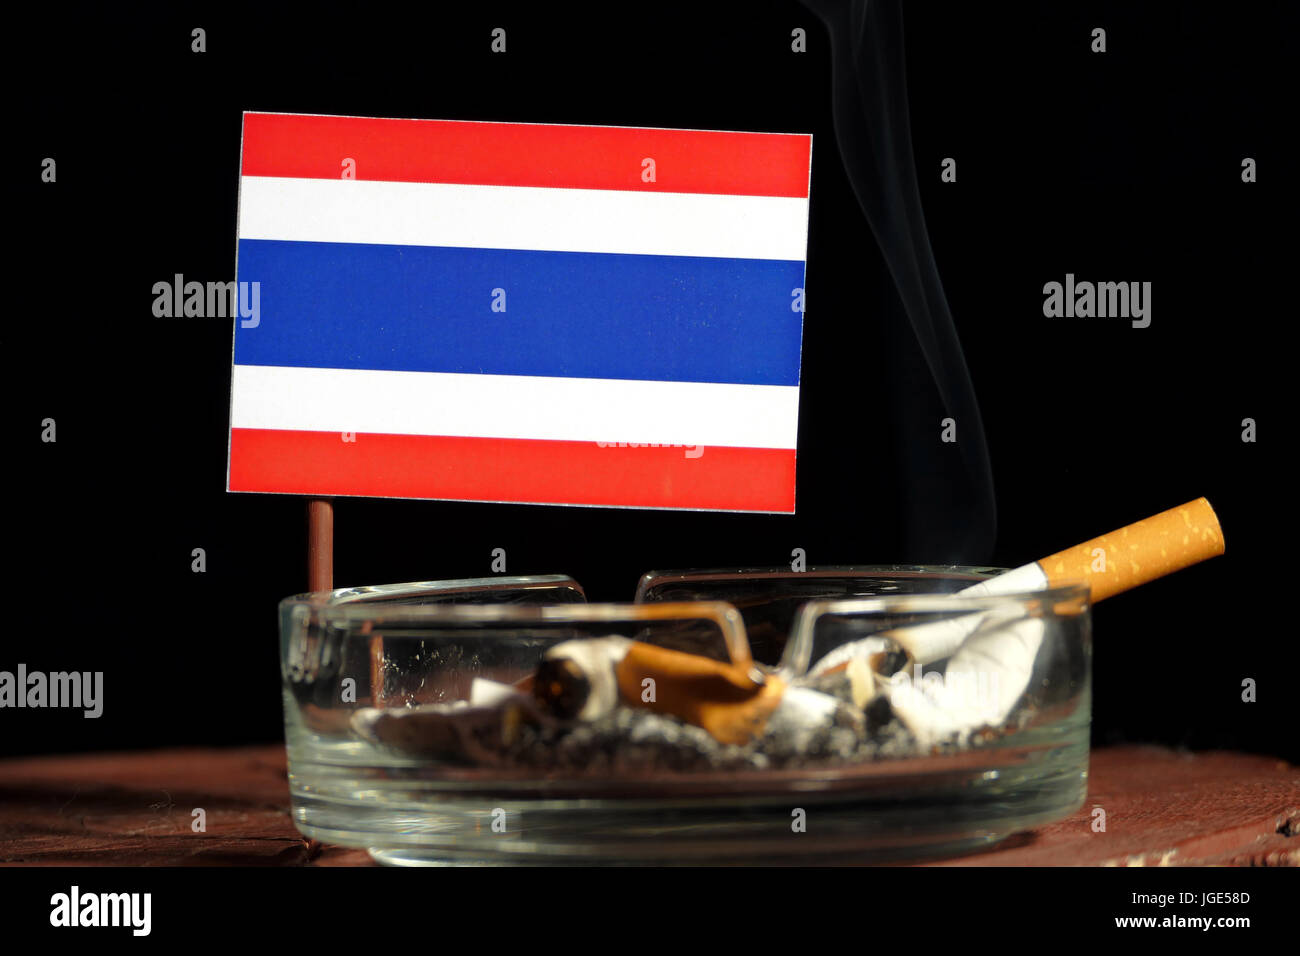 Thai flag with burning cigarette in ashtray isolated on black background Stock Photo